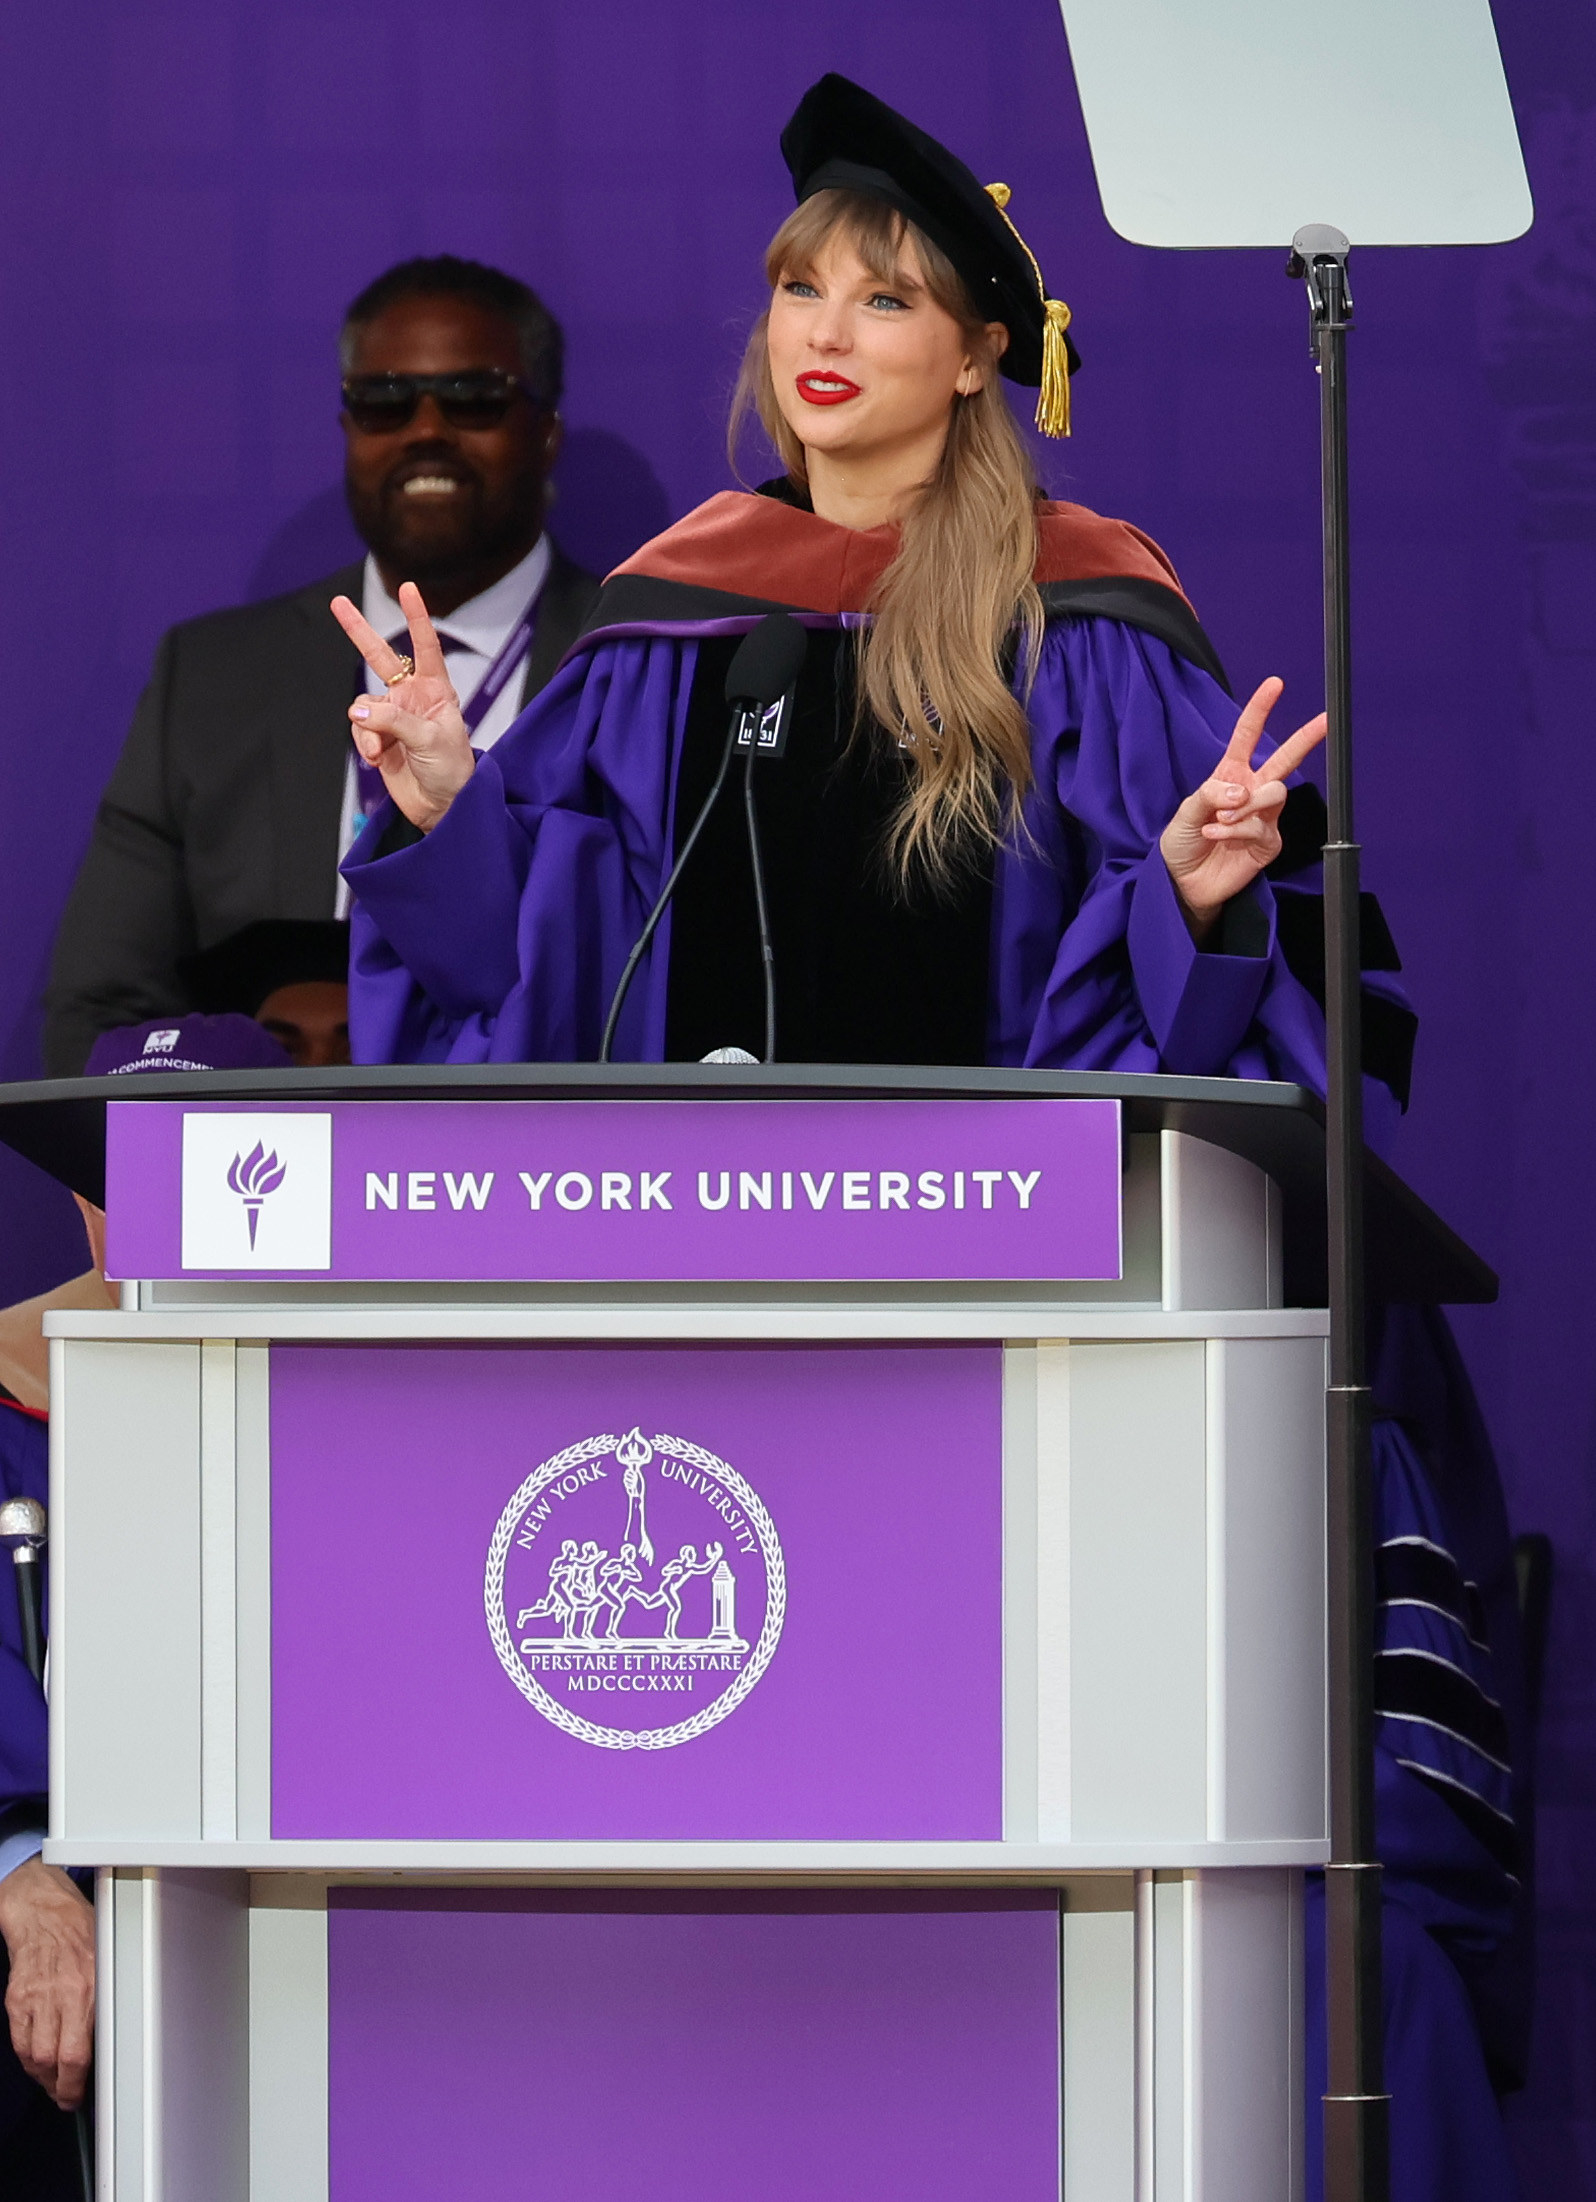 Taylor Swift giving a commencement speech